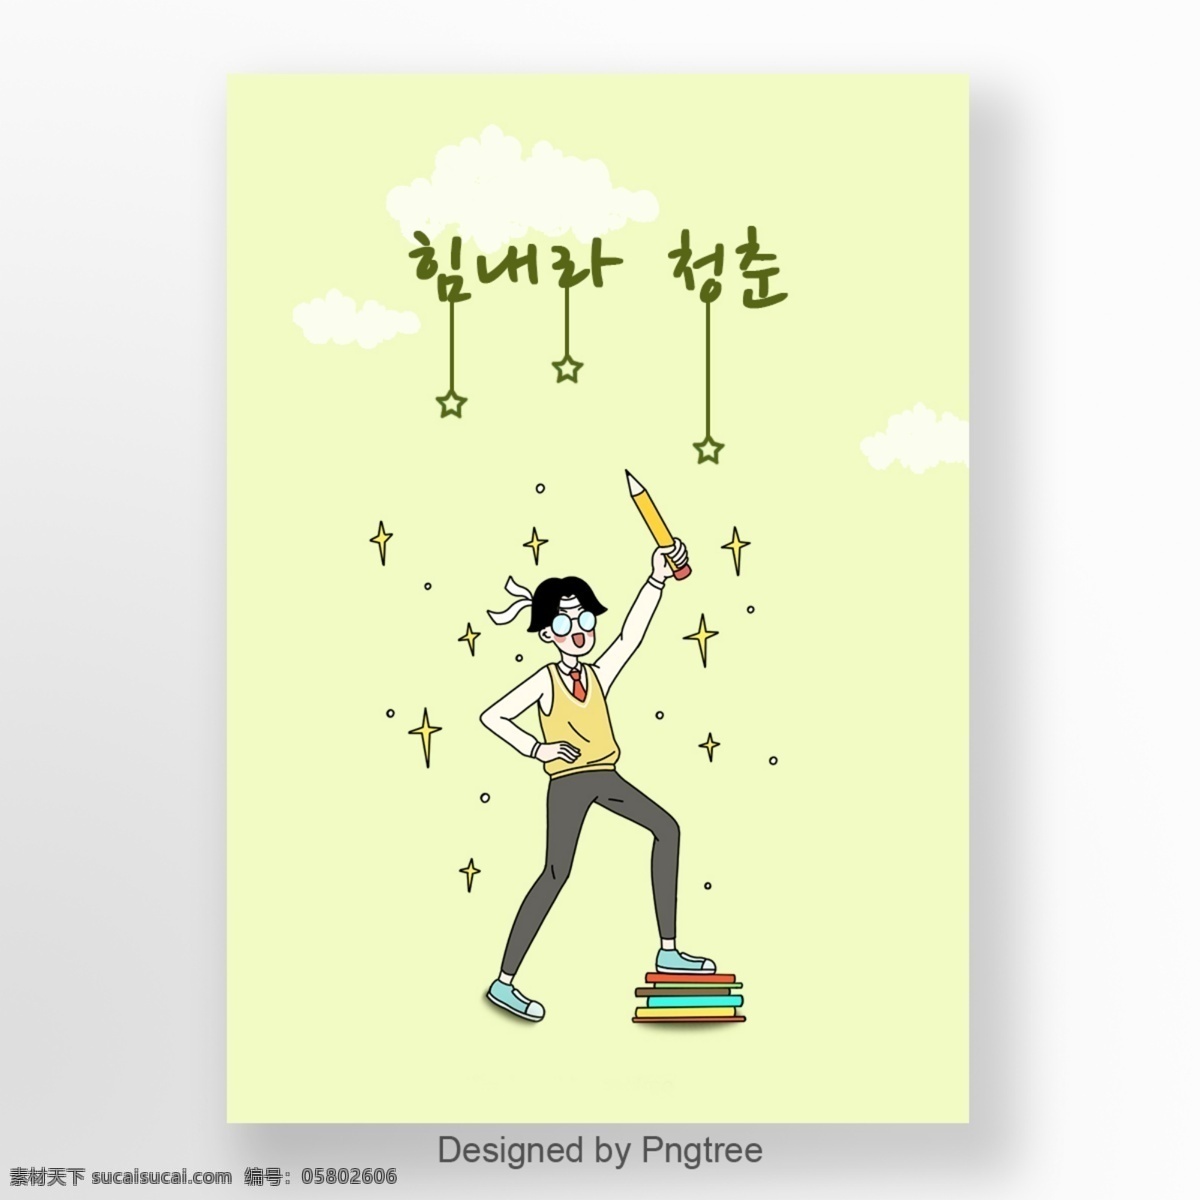 xie 学生 高考 中 认为 青年 学习 海报 模板 肝脏药物 绿色 星 纯色 这本书 新鲜 年轻人 动画片 学生们 韩国 移动支付 一个 字 移动 支付 鼓励 在论文中